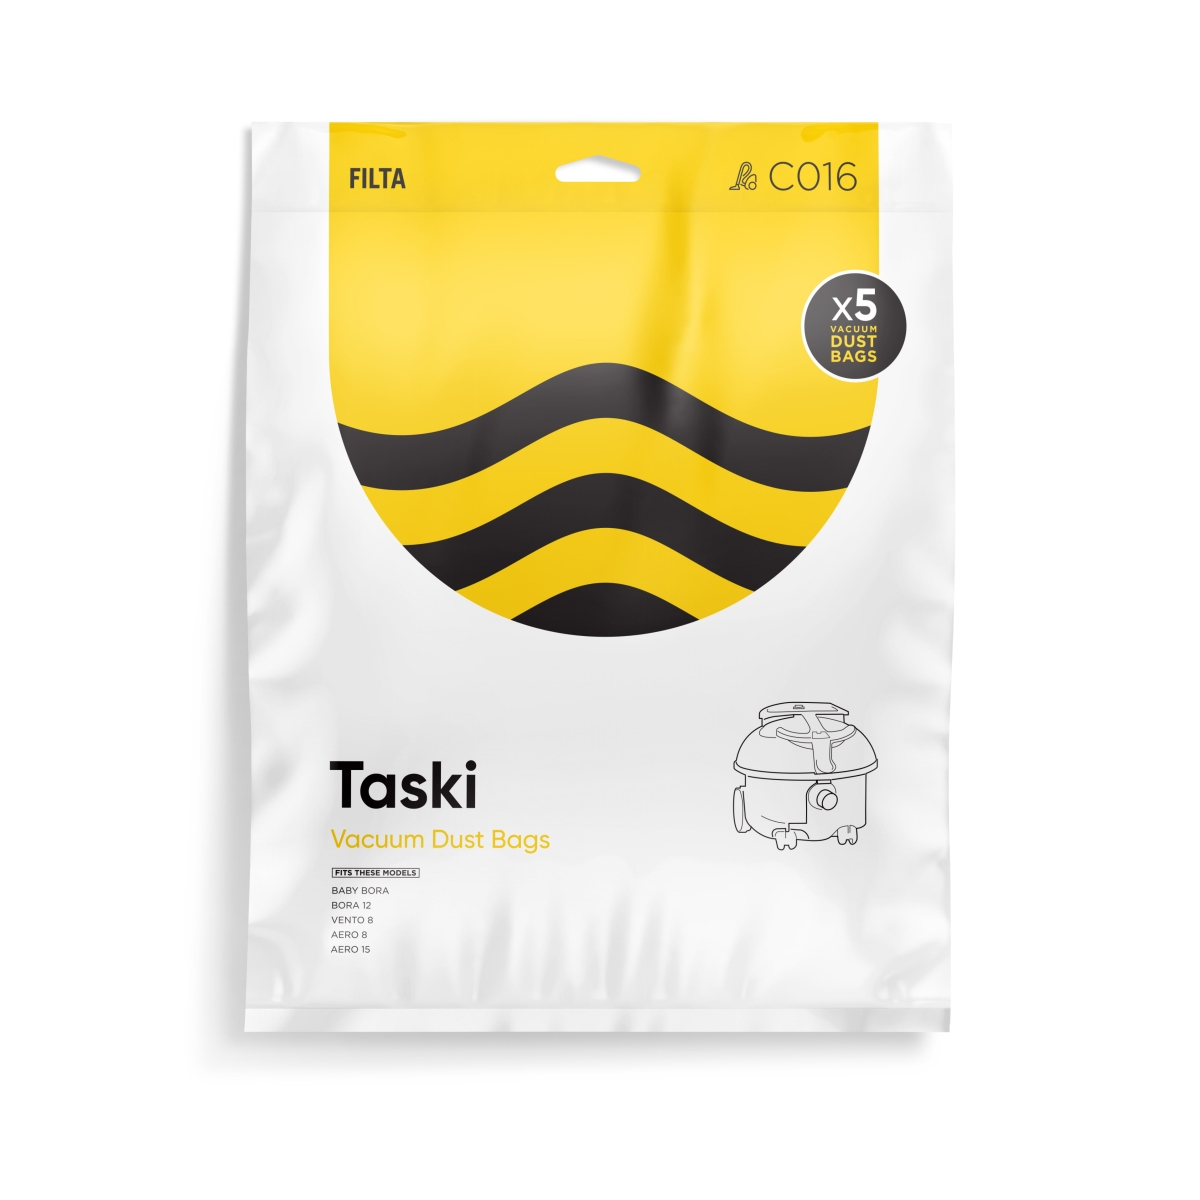 Filta Taski Microfibre Vacuum Cleaner Bags (5 Pack)